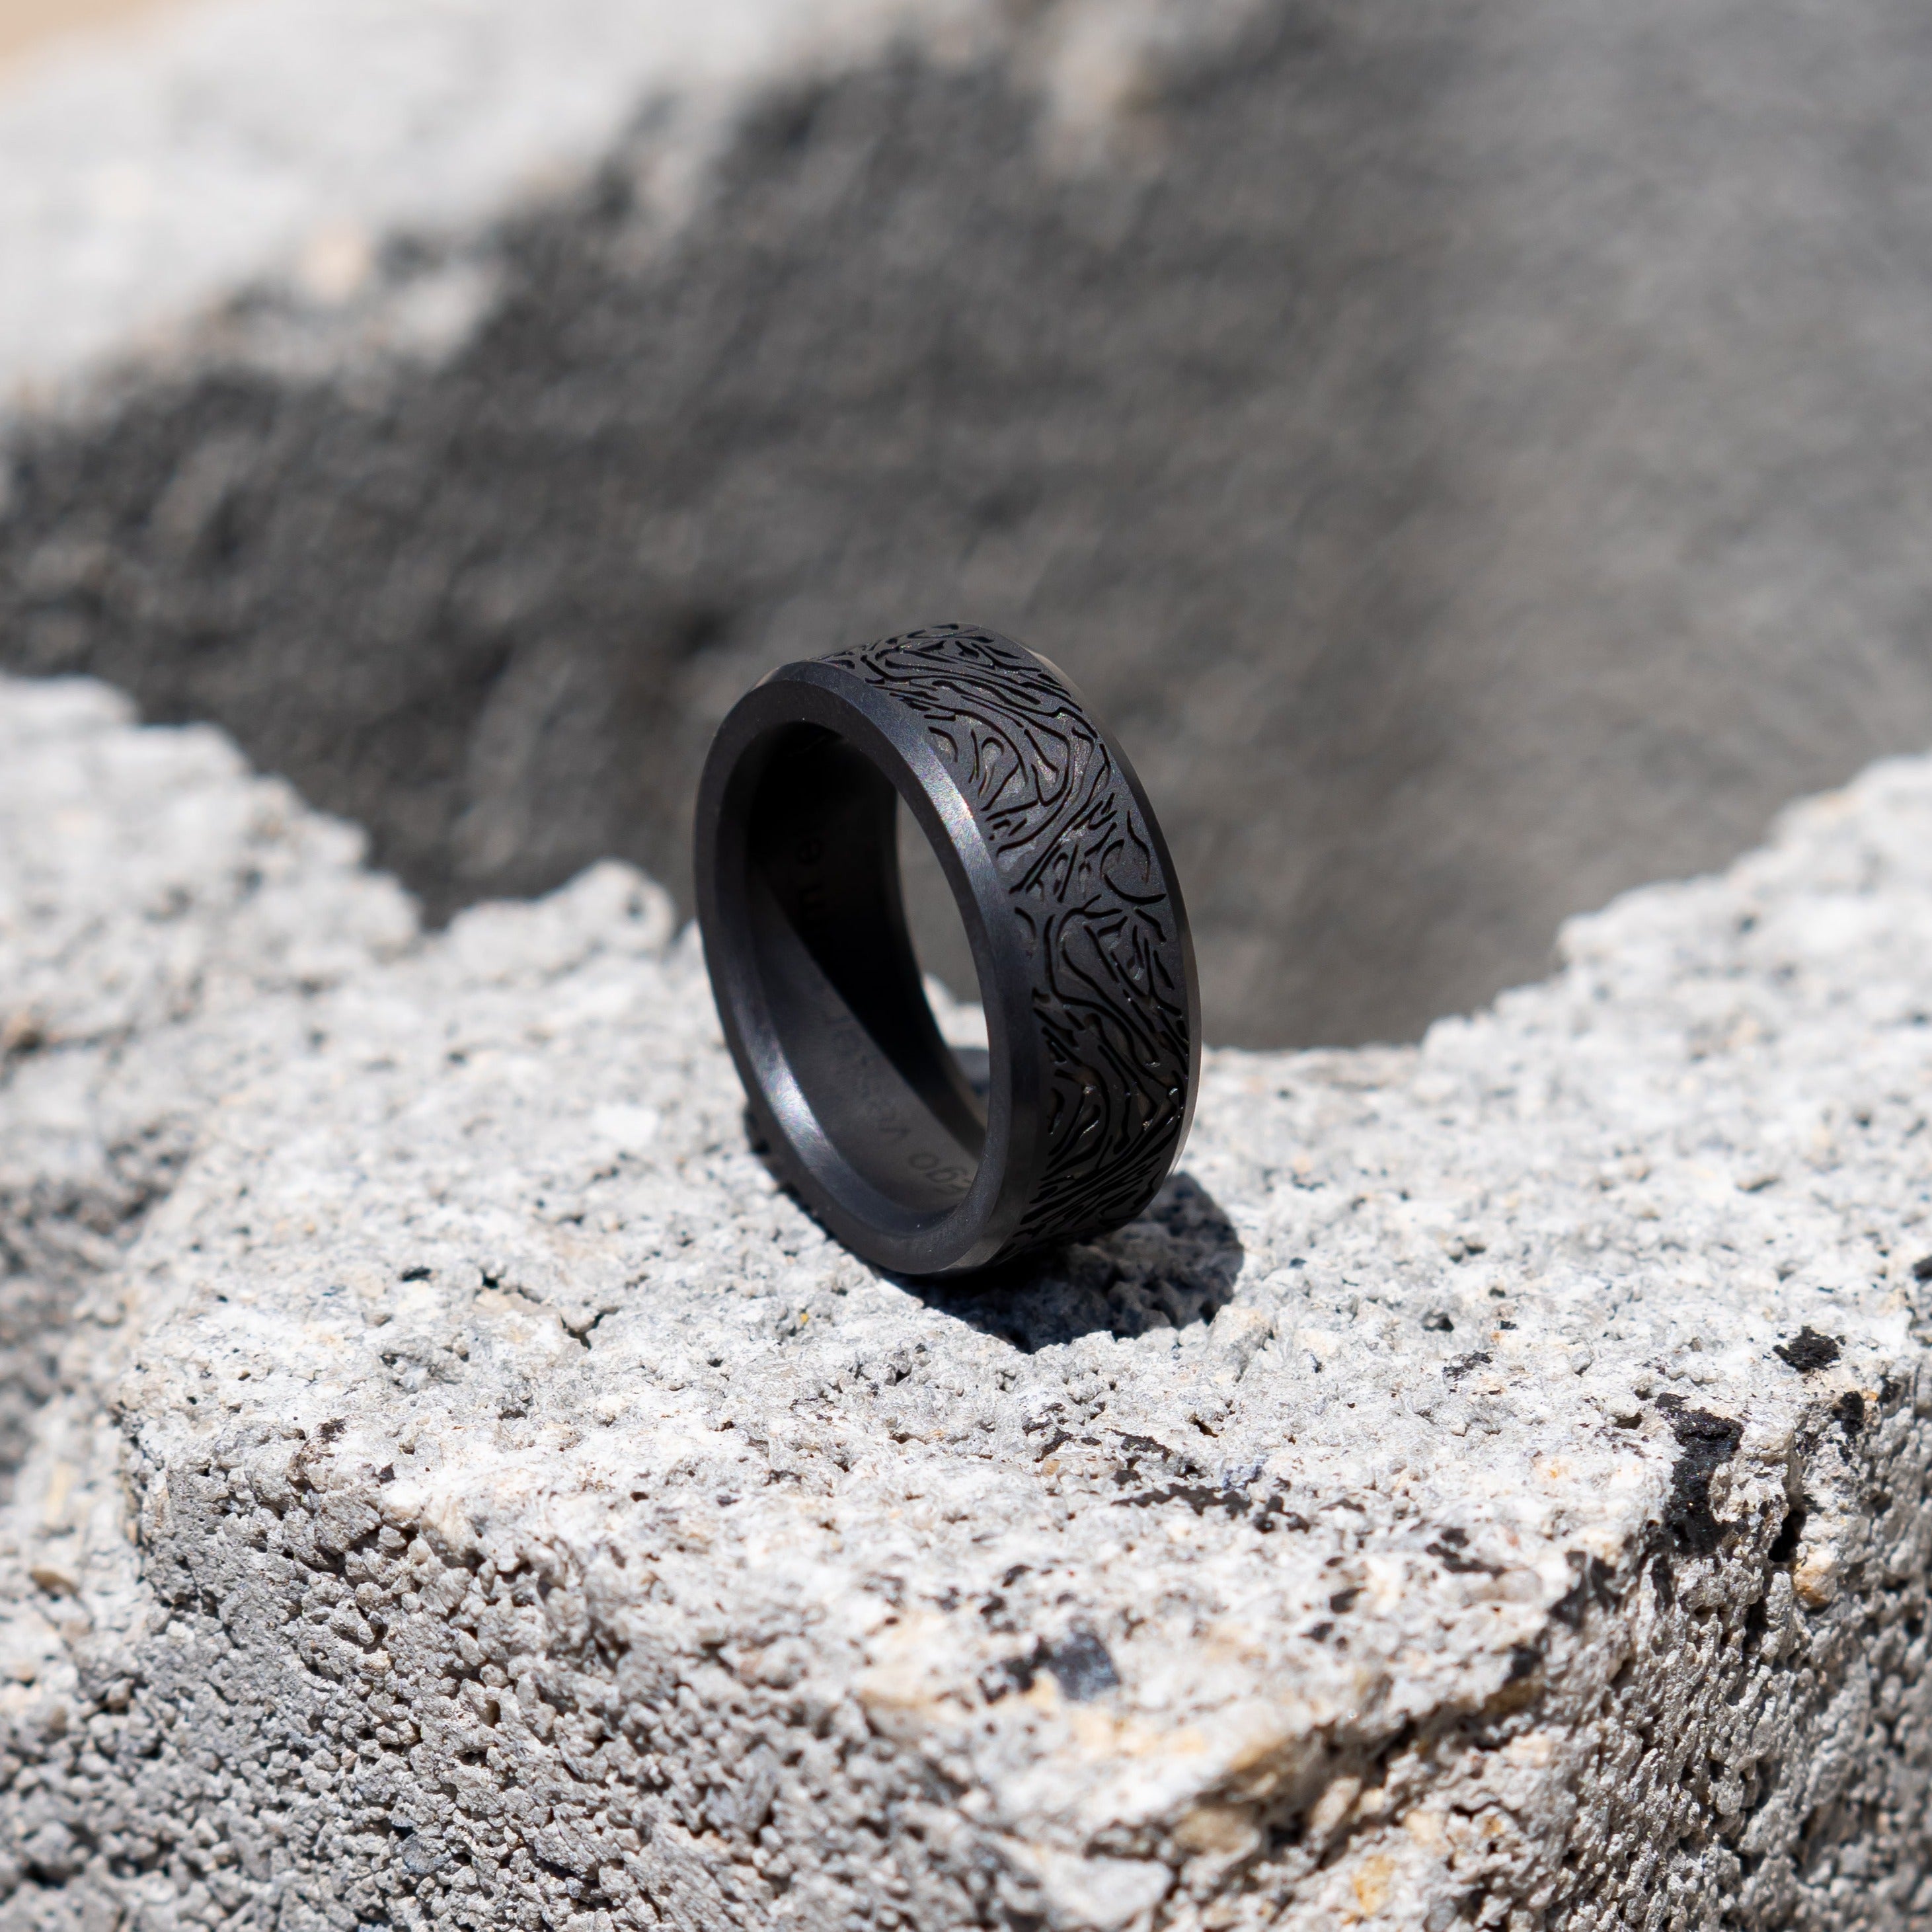 Black Rose- .50ct Round Cut Moissanite 14k Gold Modern Goth Engagement Ring  from Black Diamonds New York